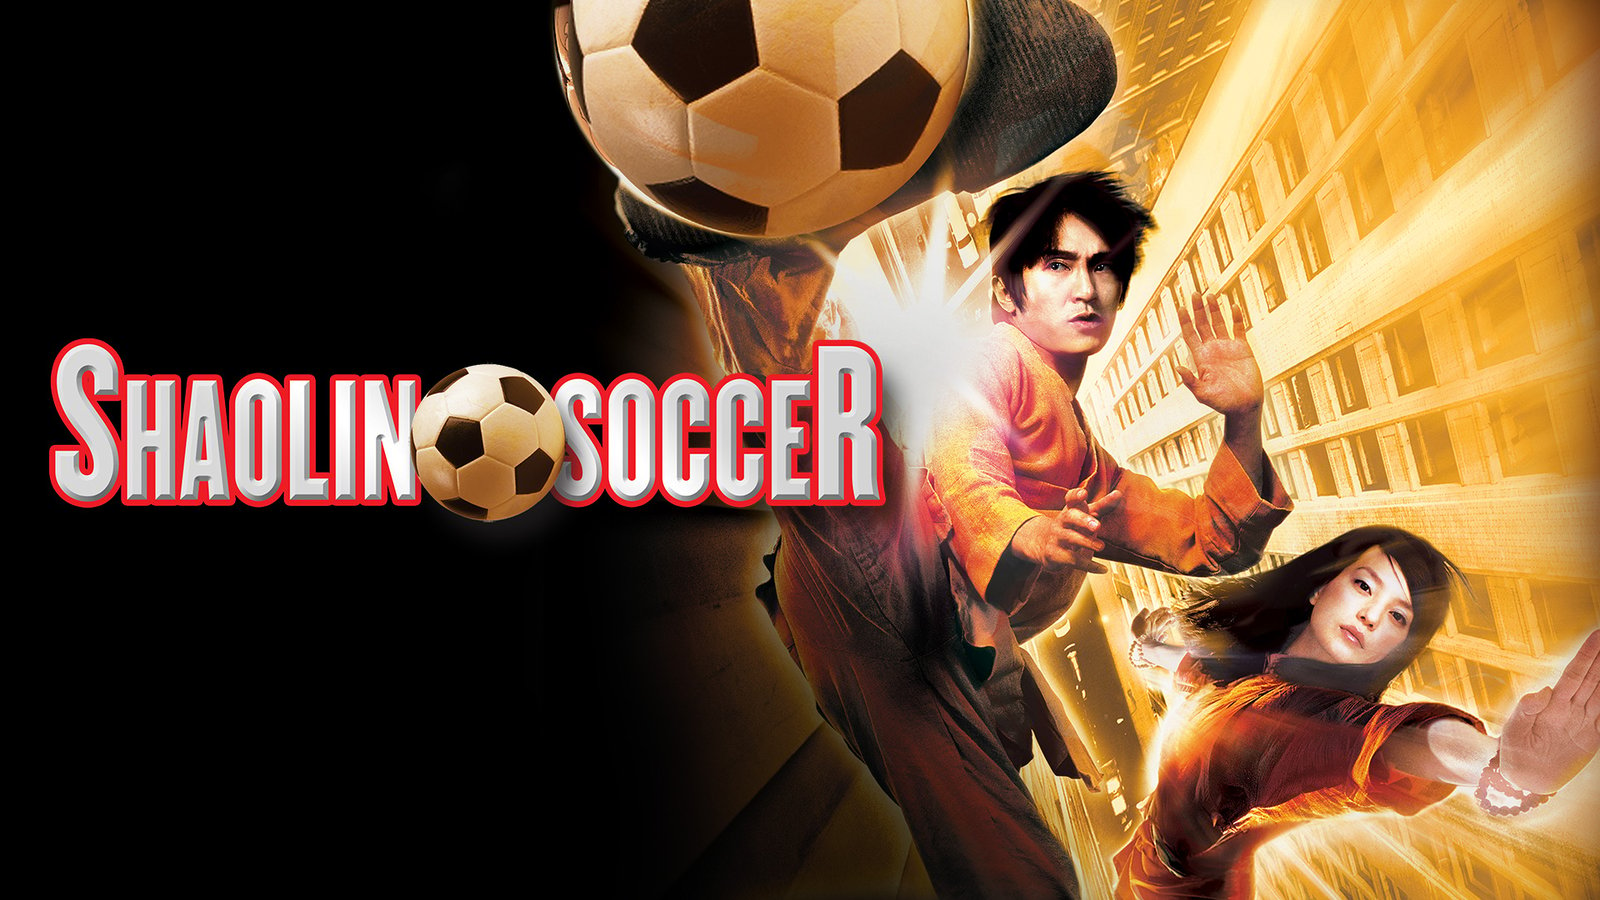 watch shaolin soccer english version online free